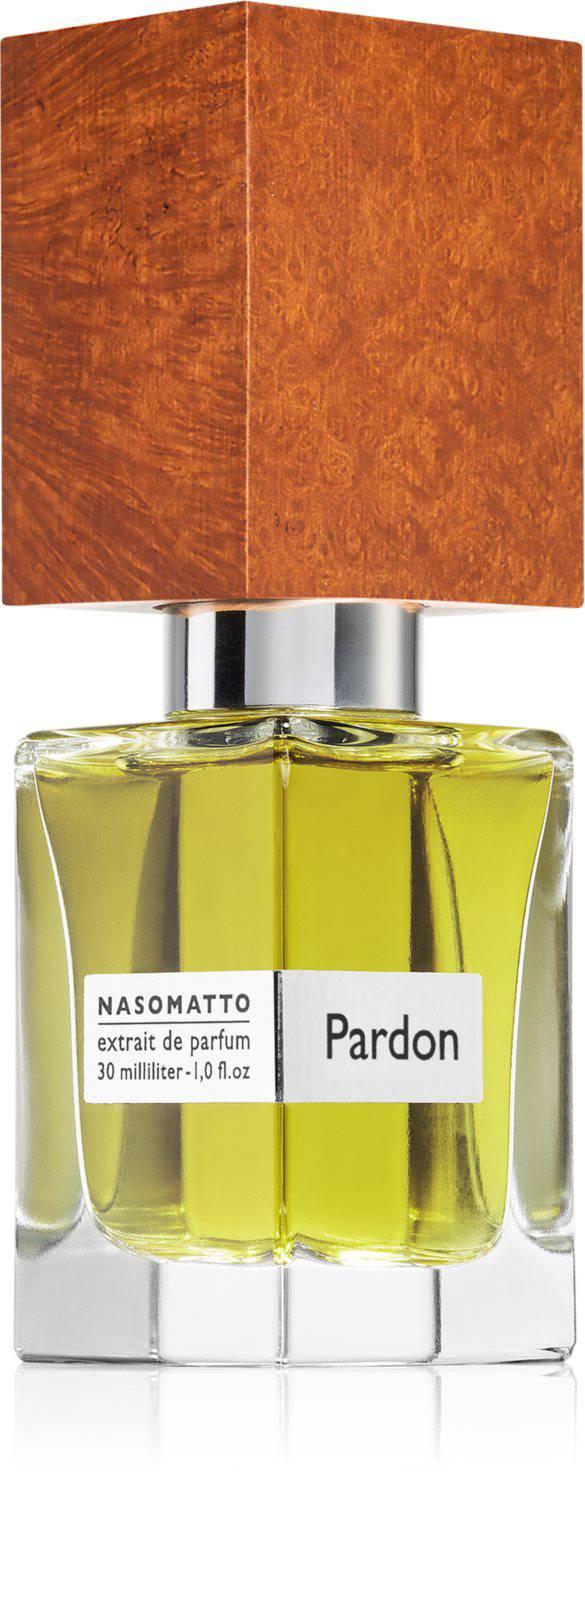 Pardon (M) Extrait De Parfum (30ml) - undefined - TheFirstScent -Hong Kong